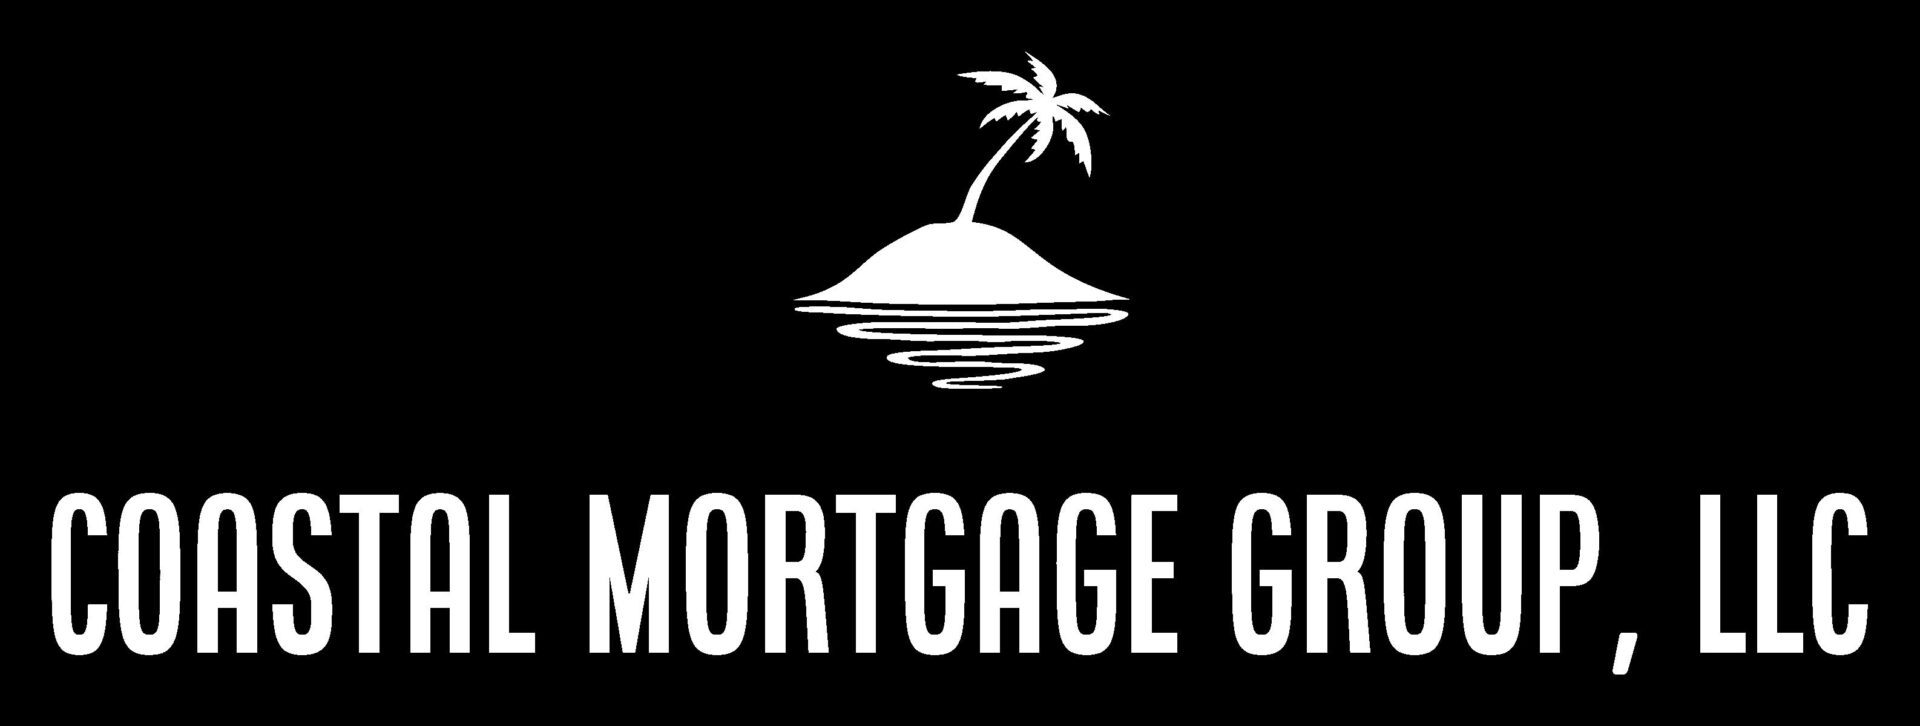 Coastal Mortgage Logo